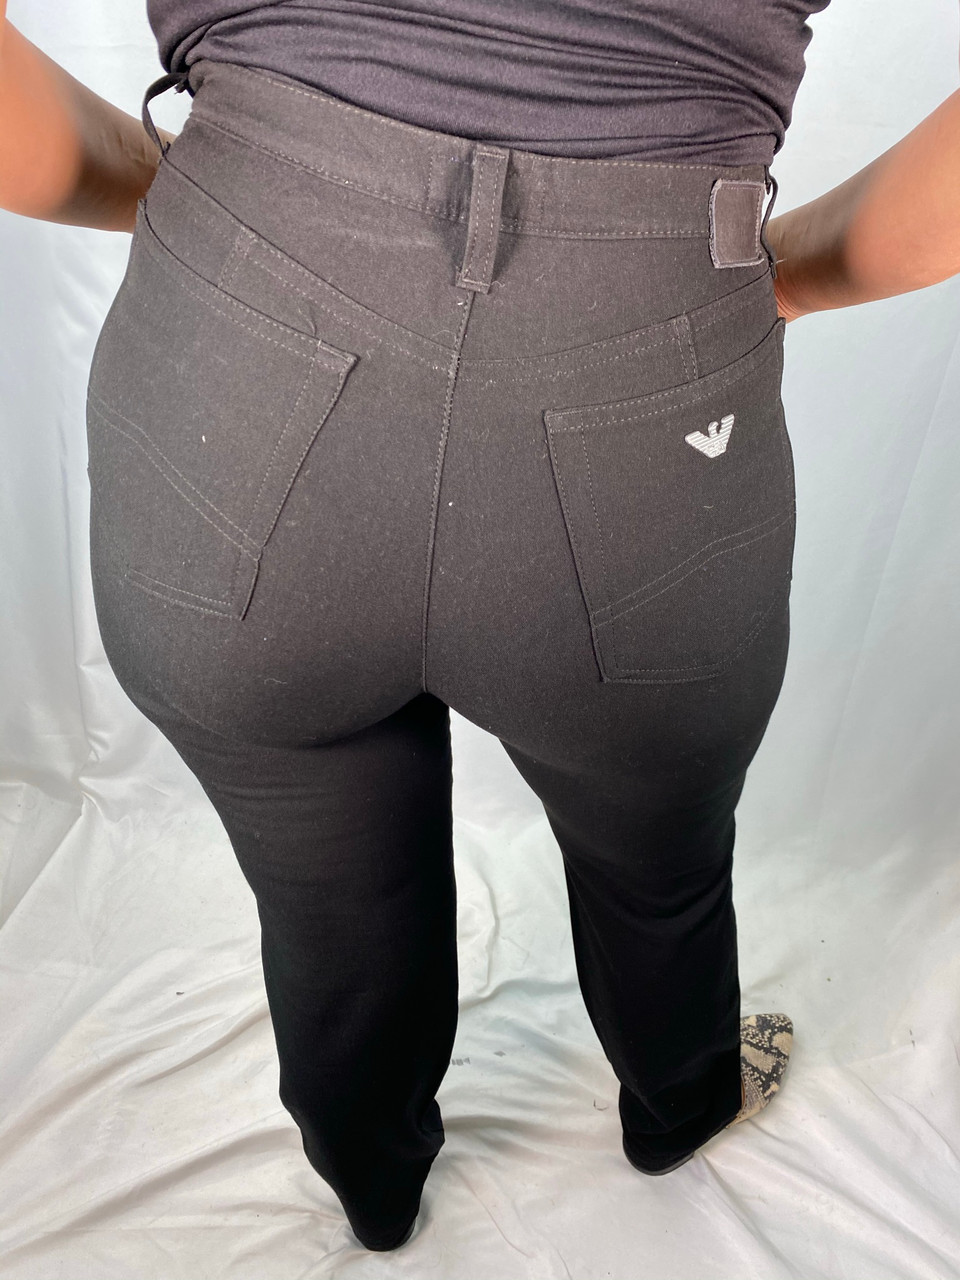 Armani Jeans Black Jeans/Pants Back Pocket